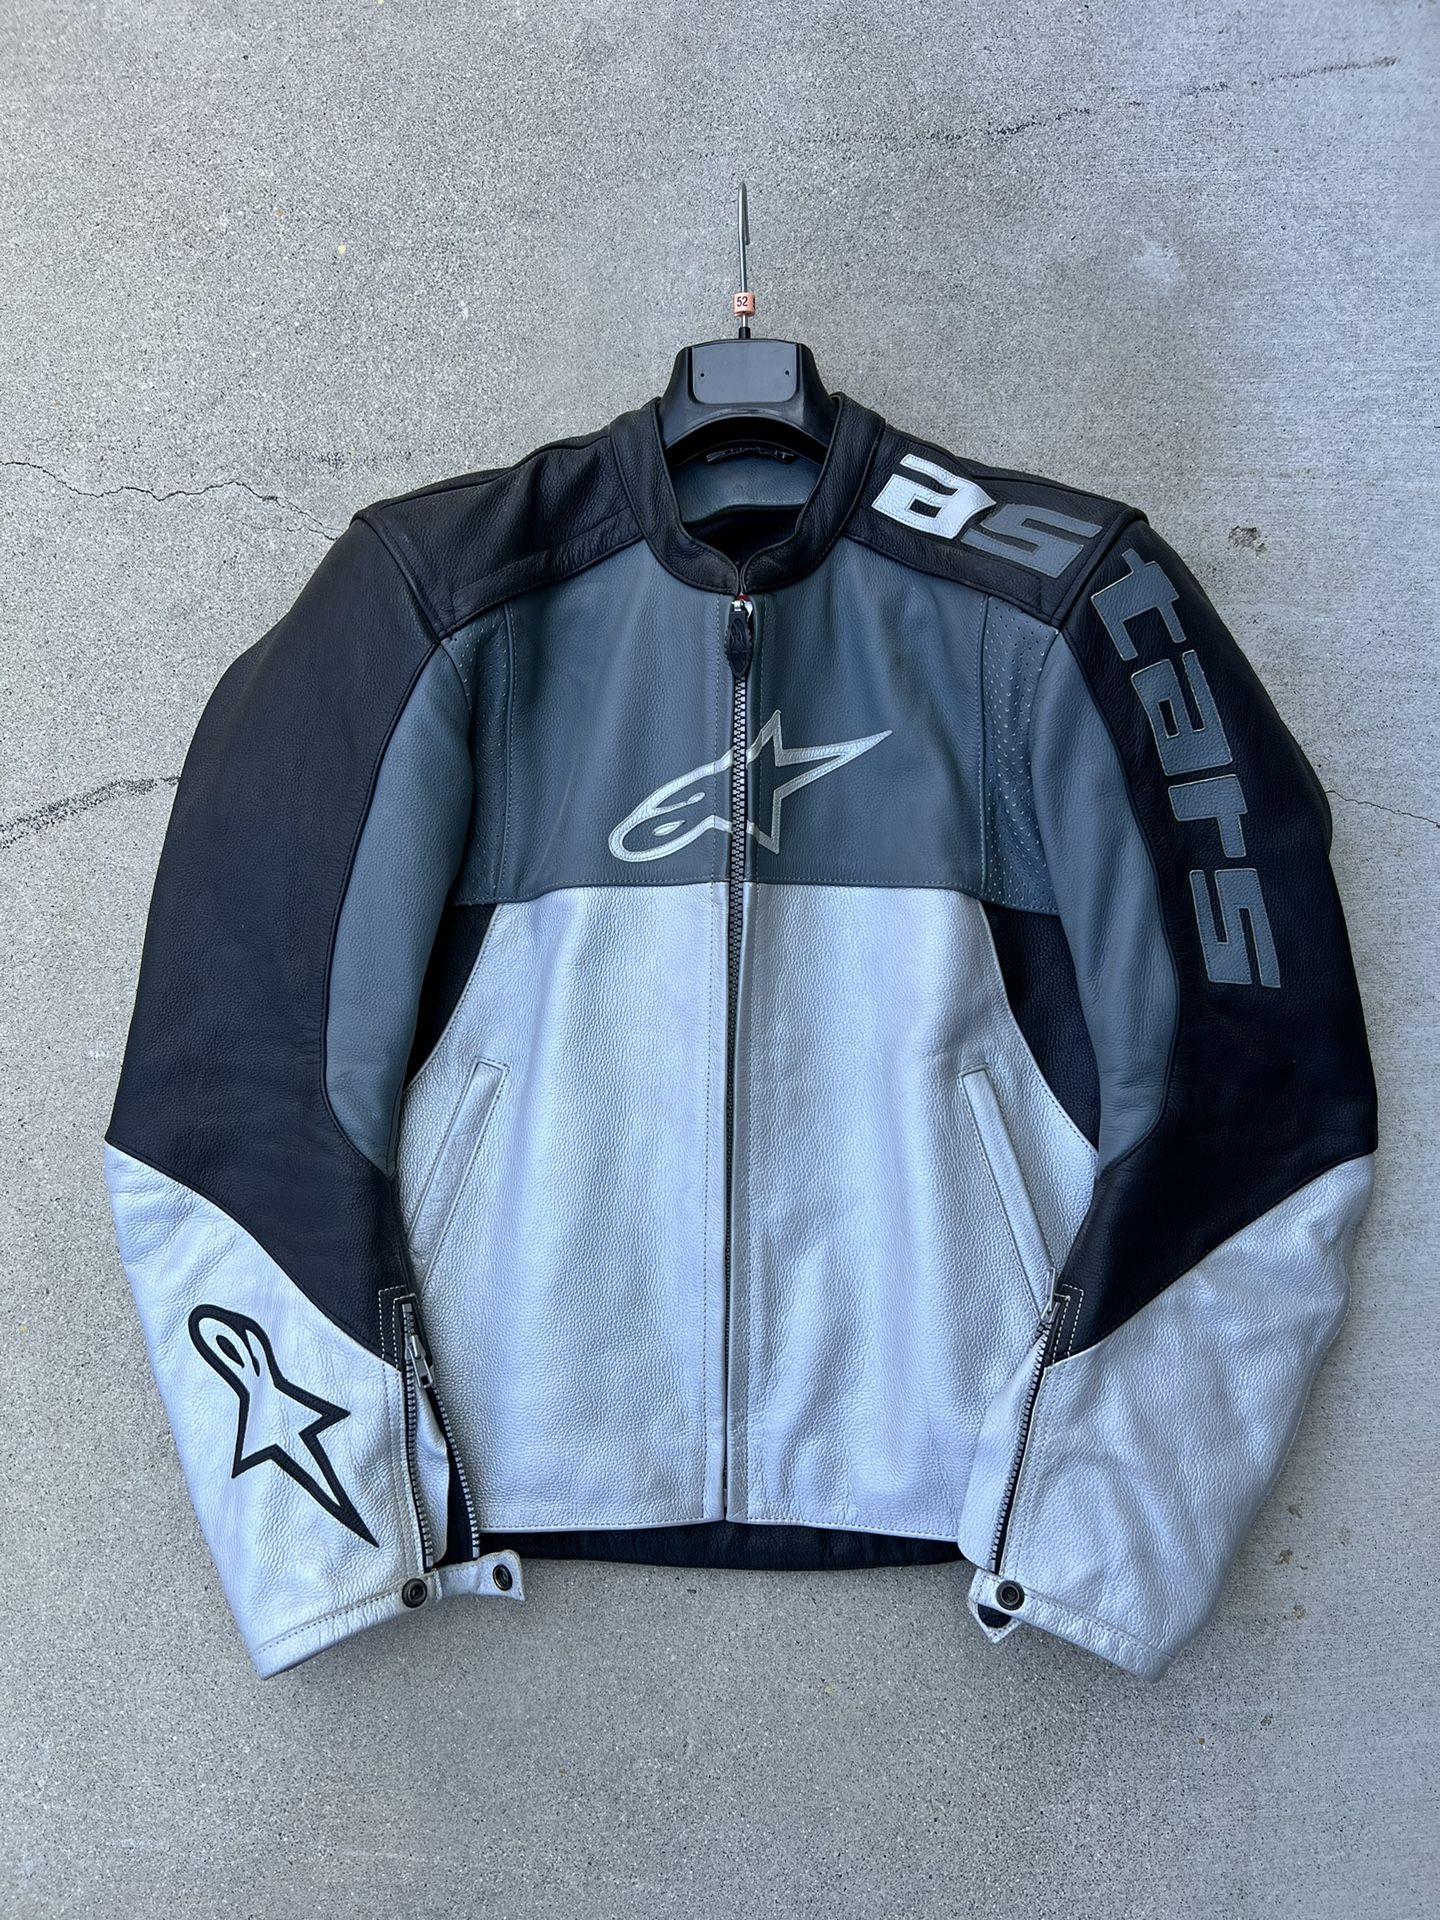 Alpinestars Leather Motorcycle Jacket 